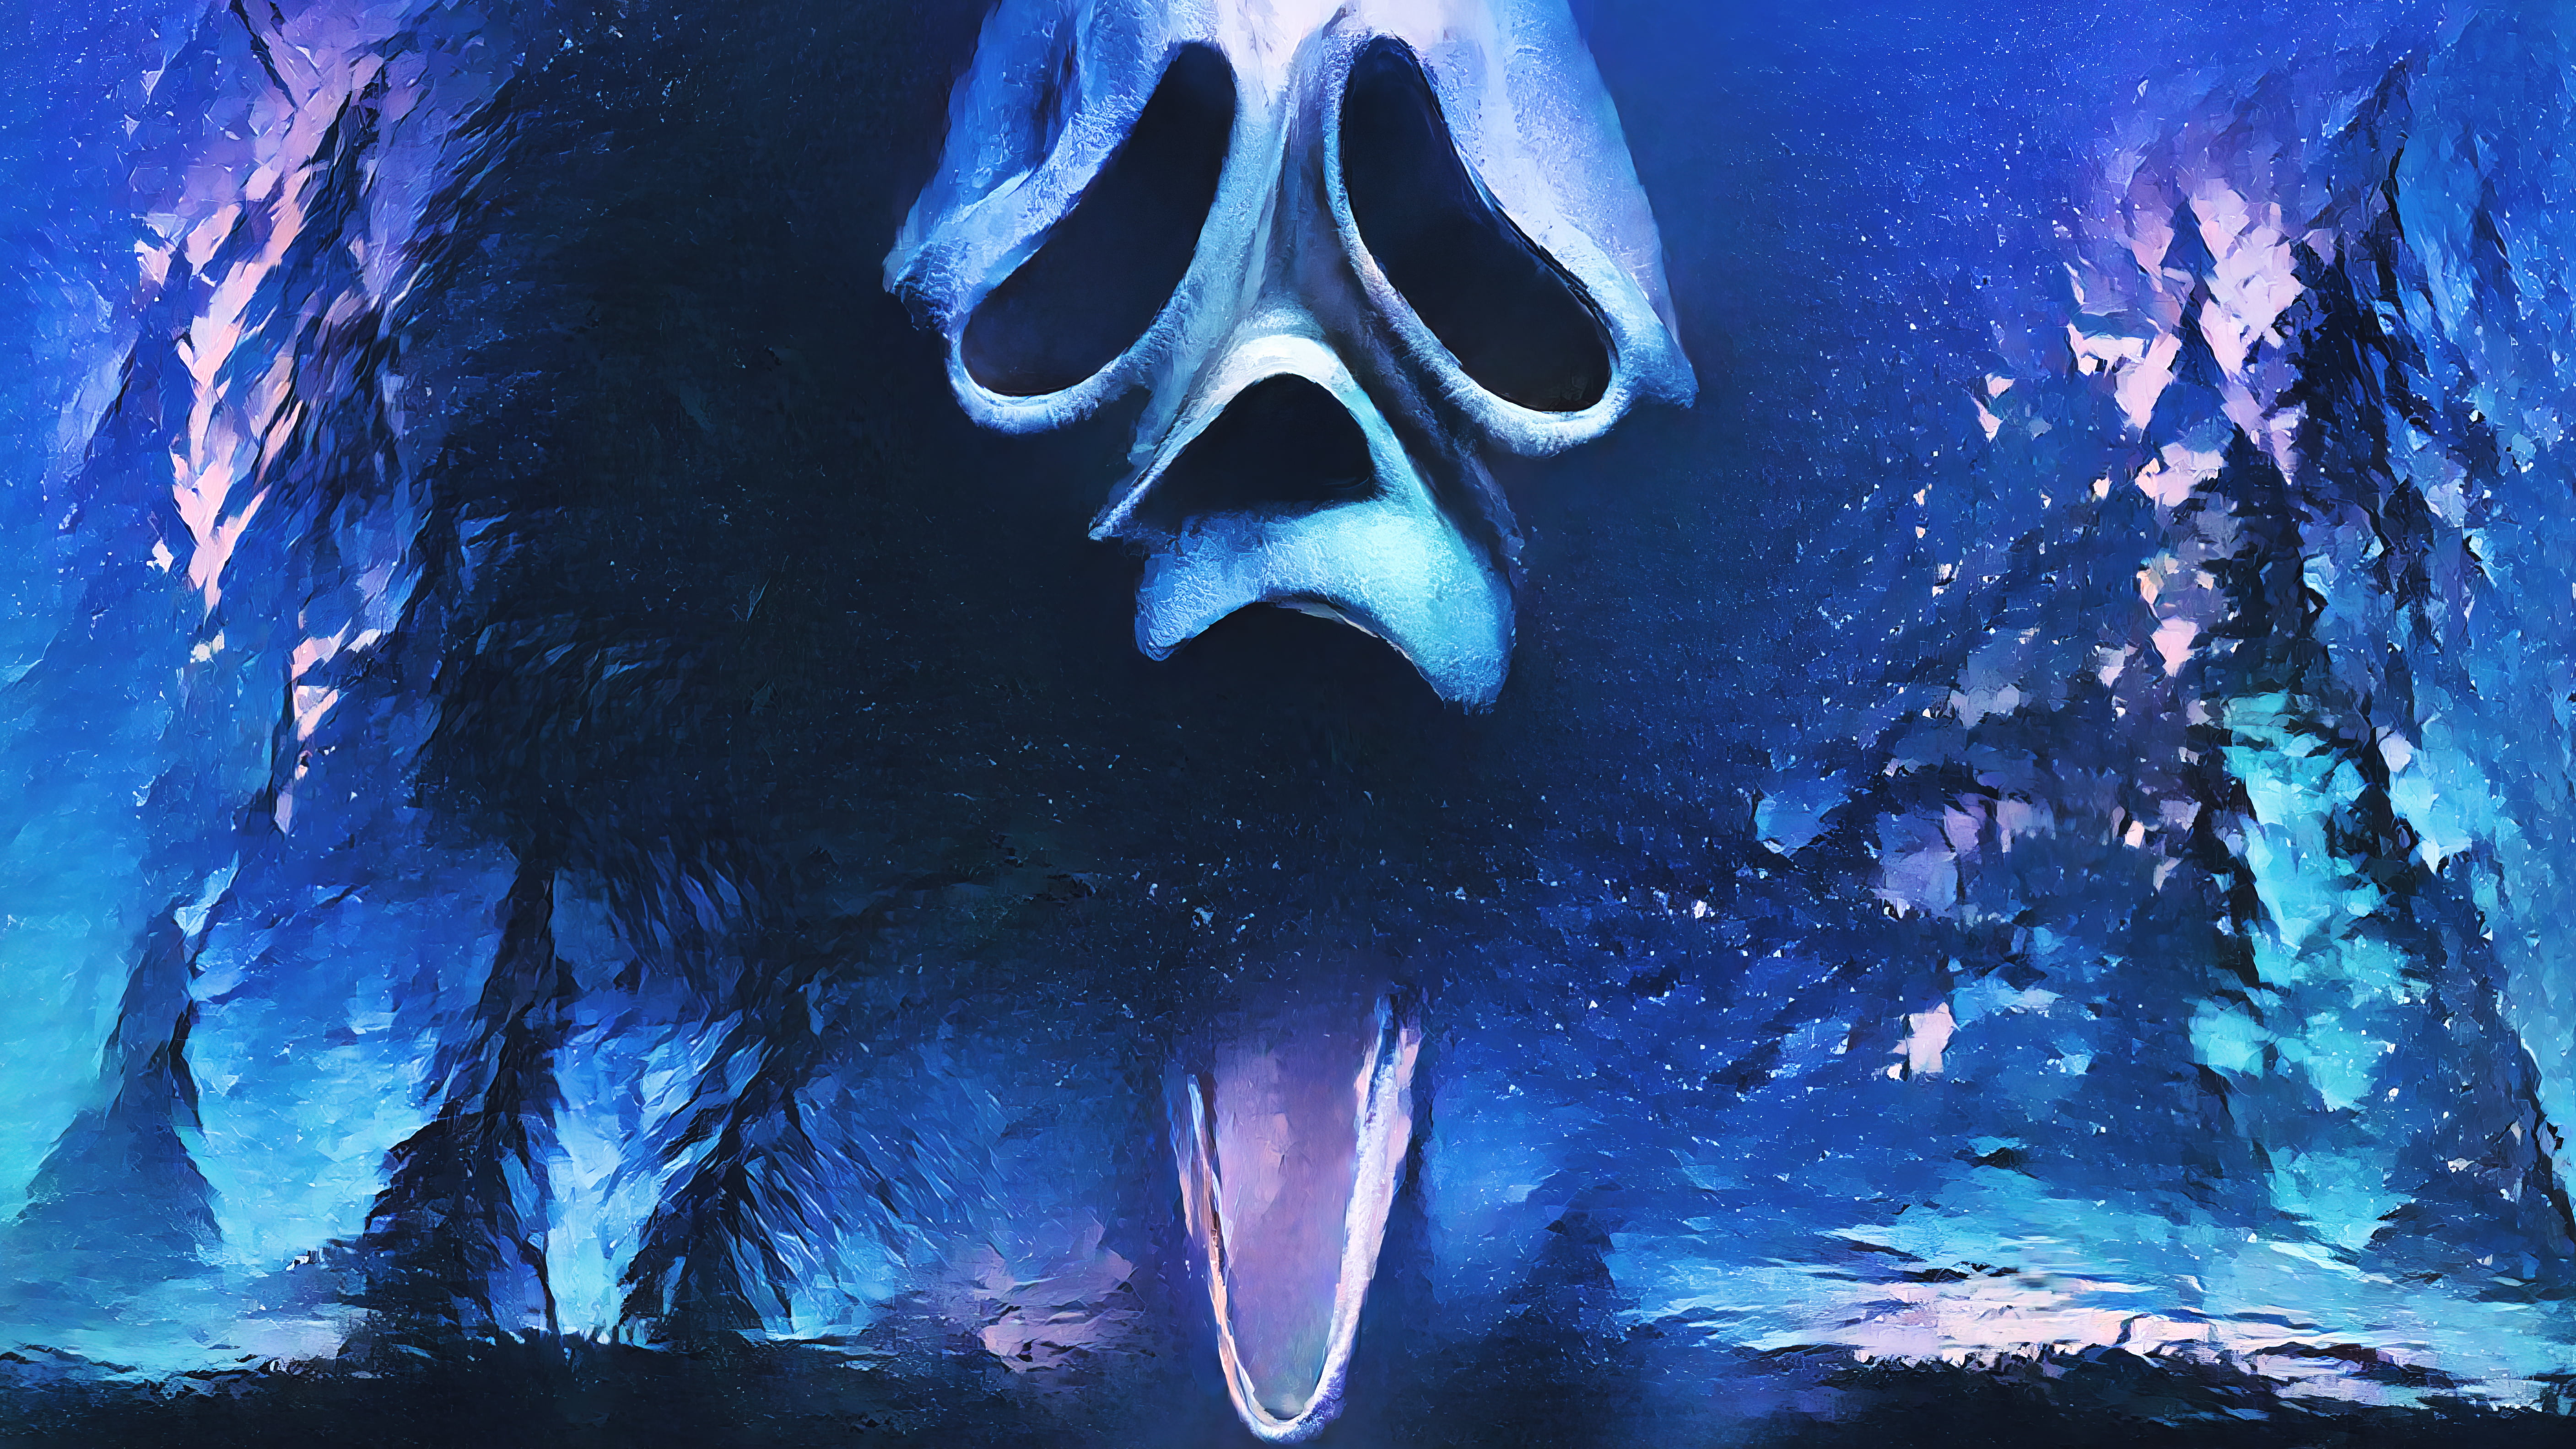 Scream  Scary wallpaper Halloween wallpaper iphone backgrounds Horror  artwork